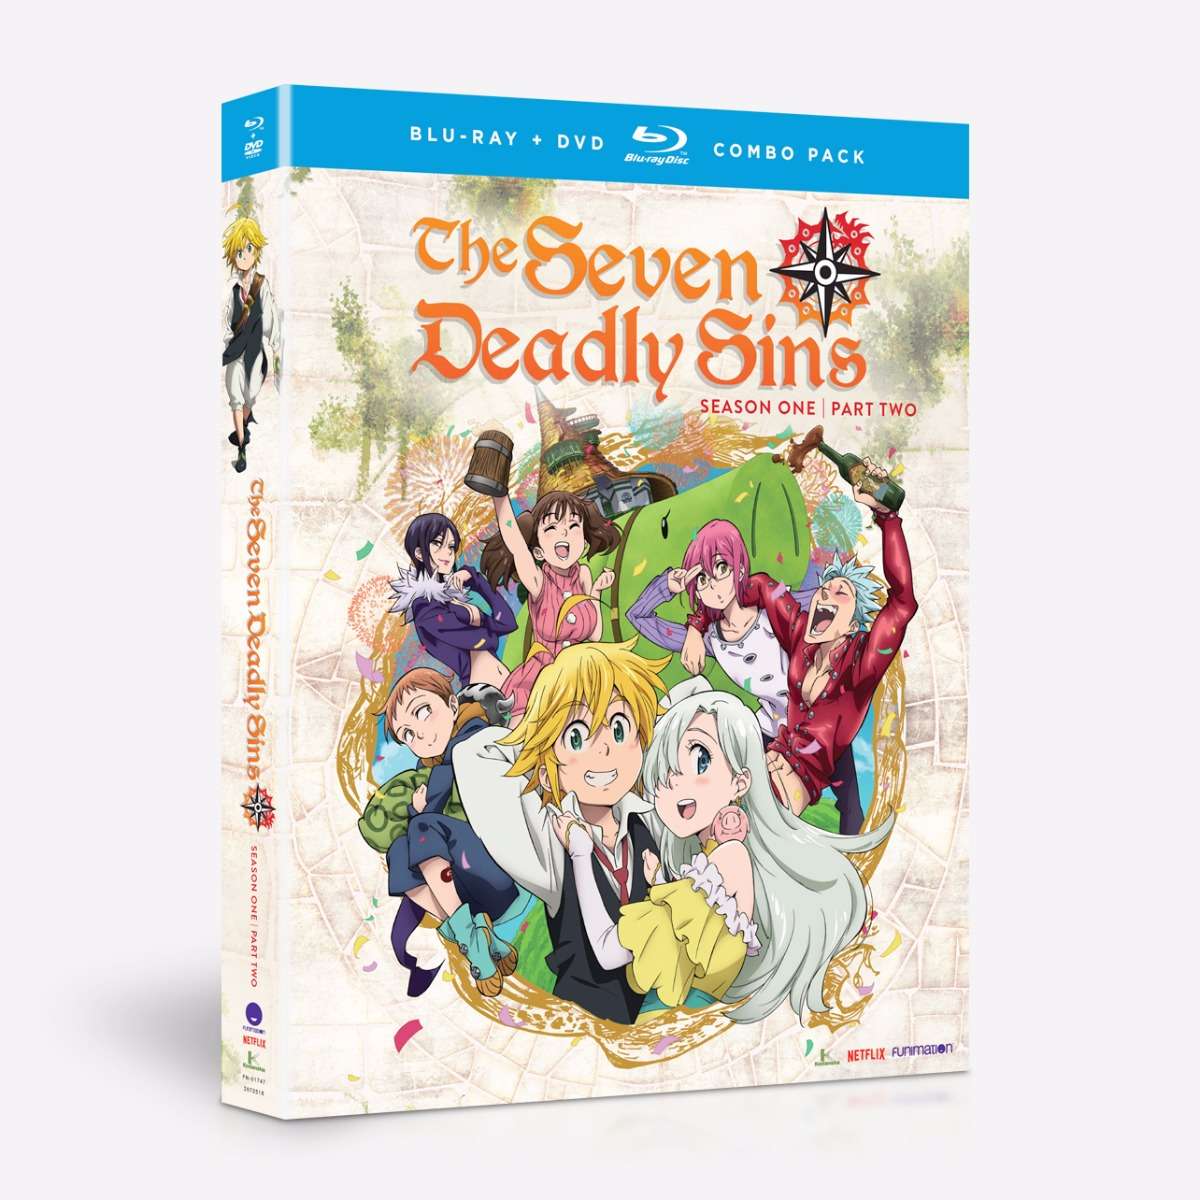 Deadly - Season 1 Part 2 - Blu-ray + DVD | Crunchyroll Store